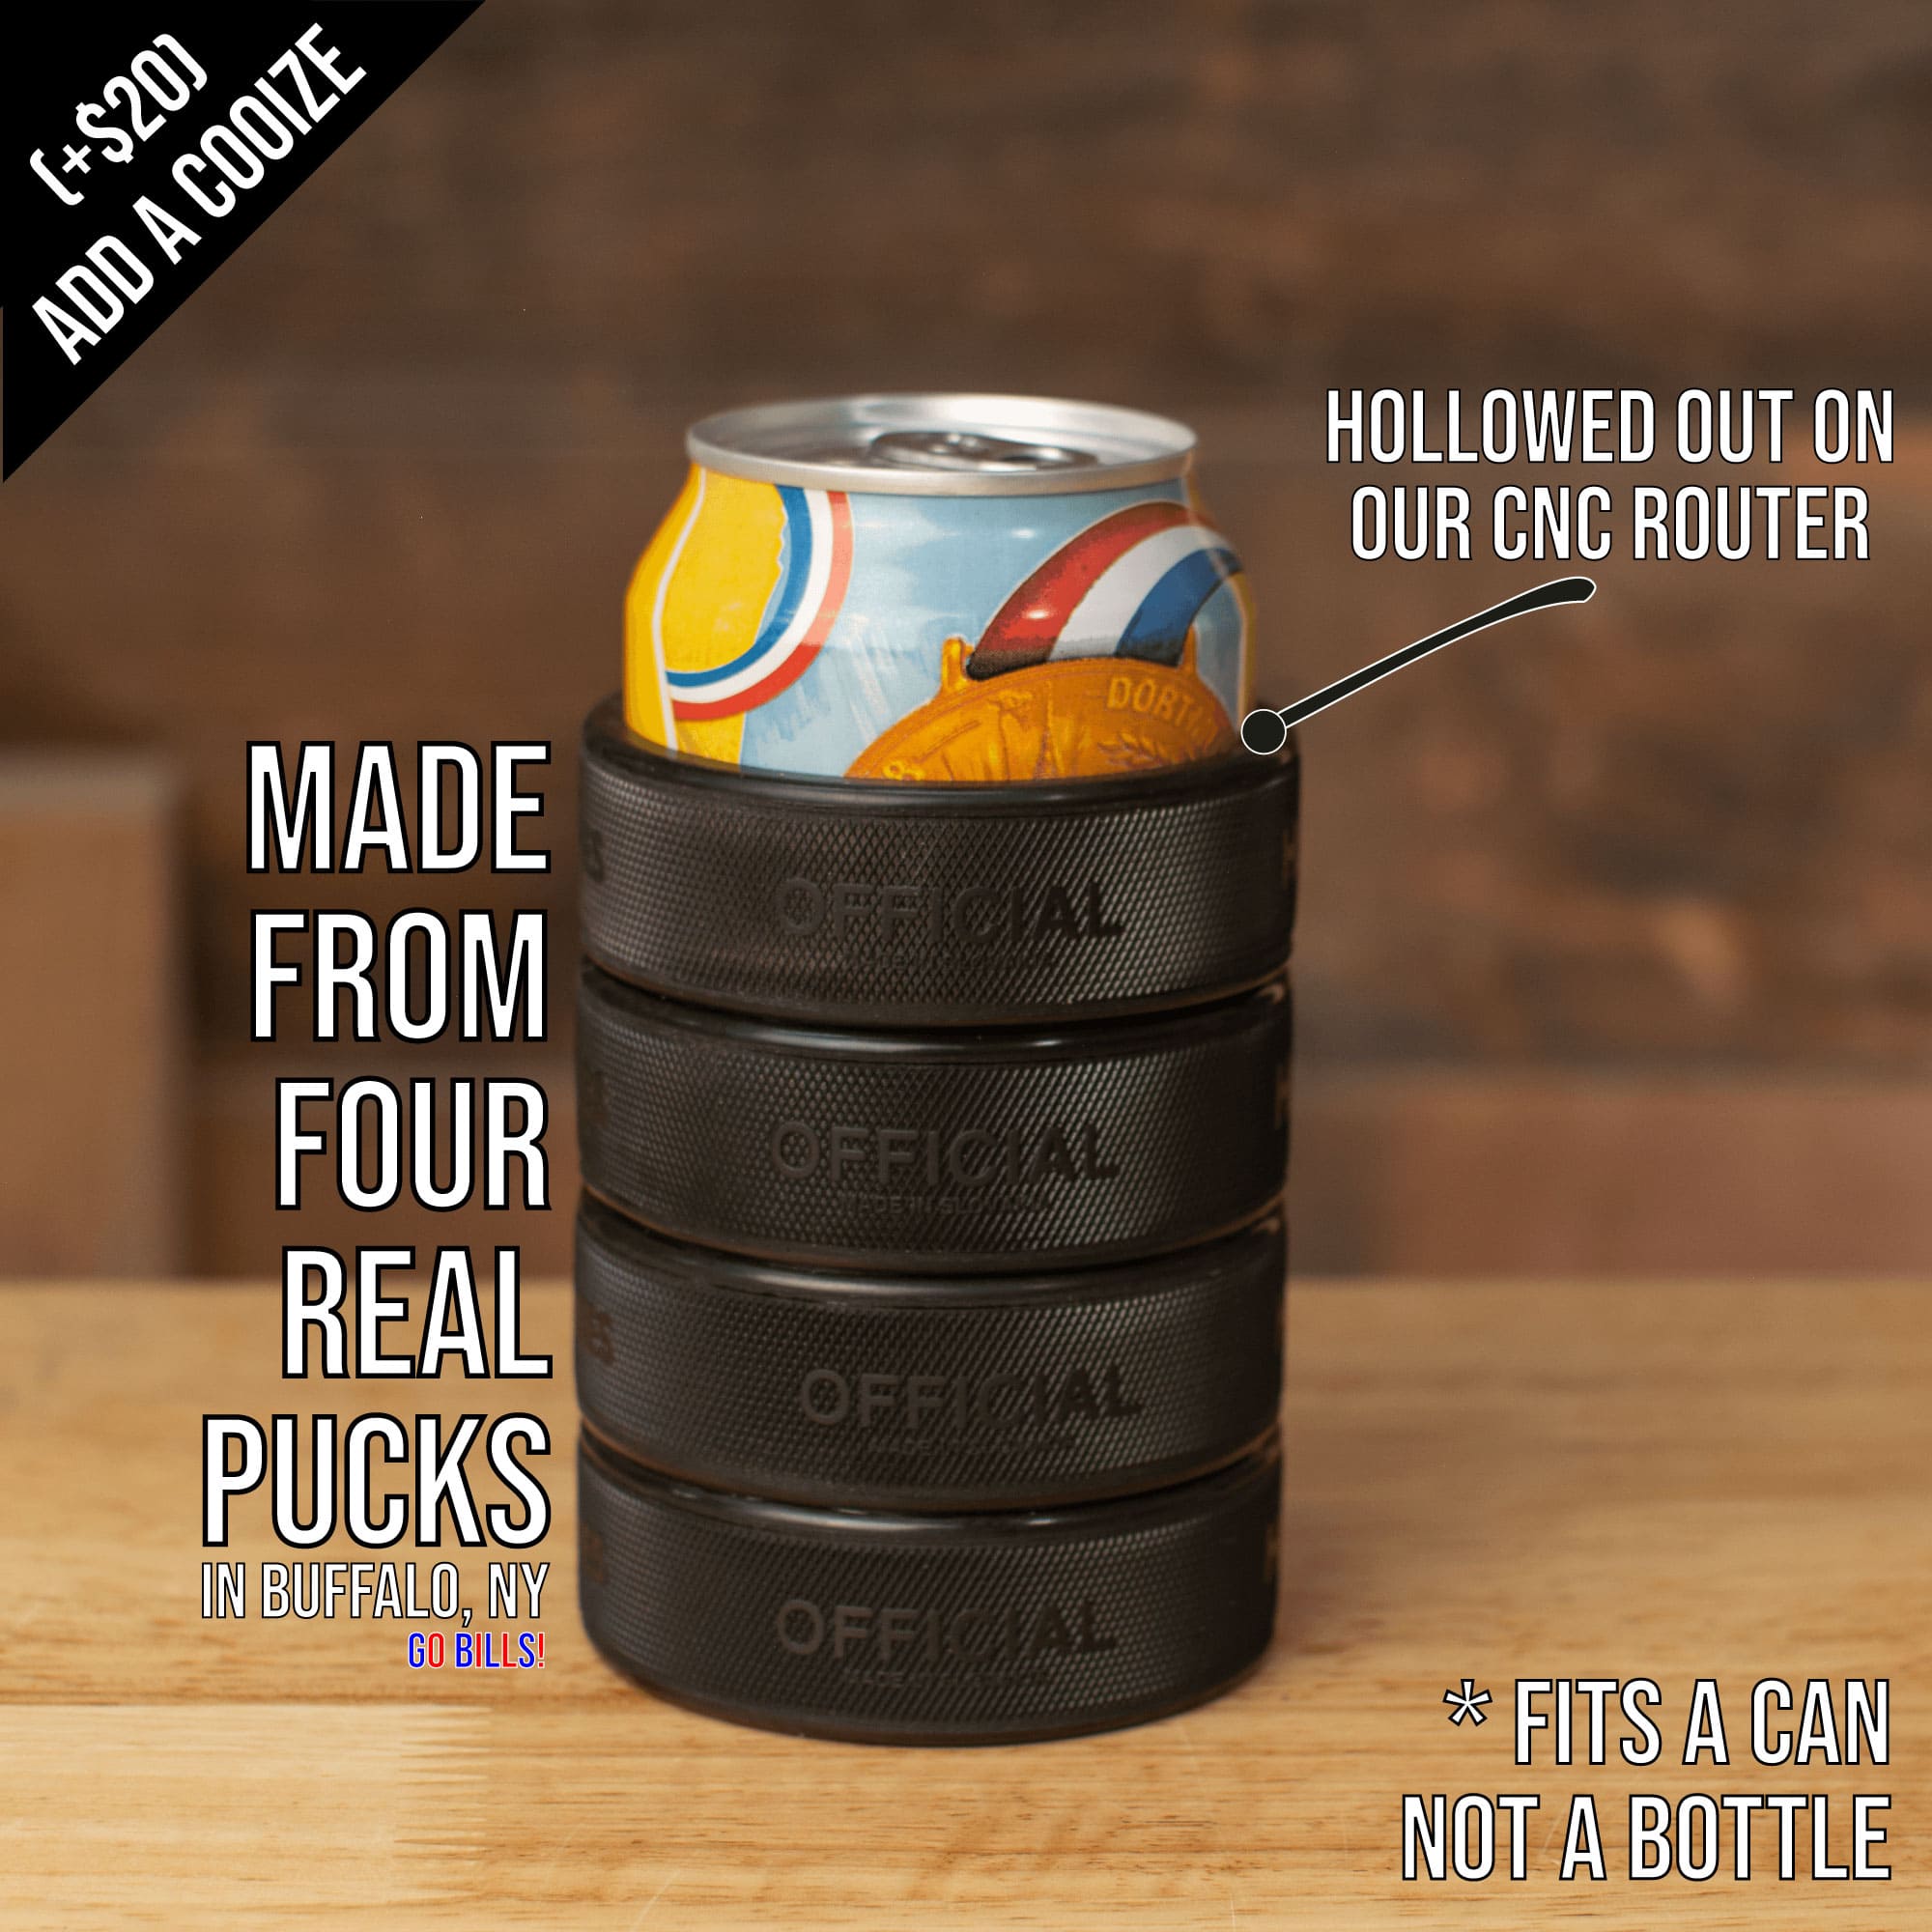 Toronto Maple Leafs, Hockey Puck Bottle Opener